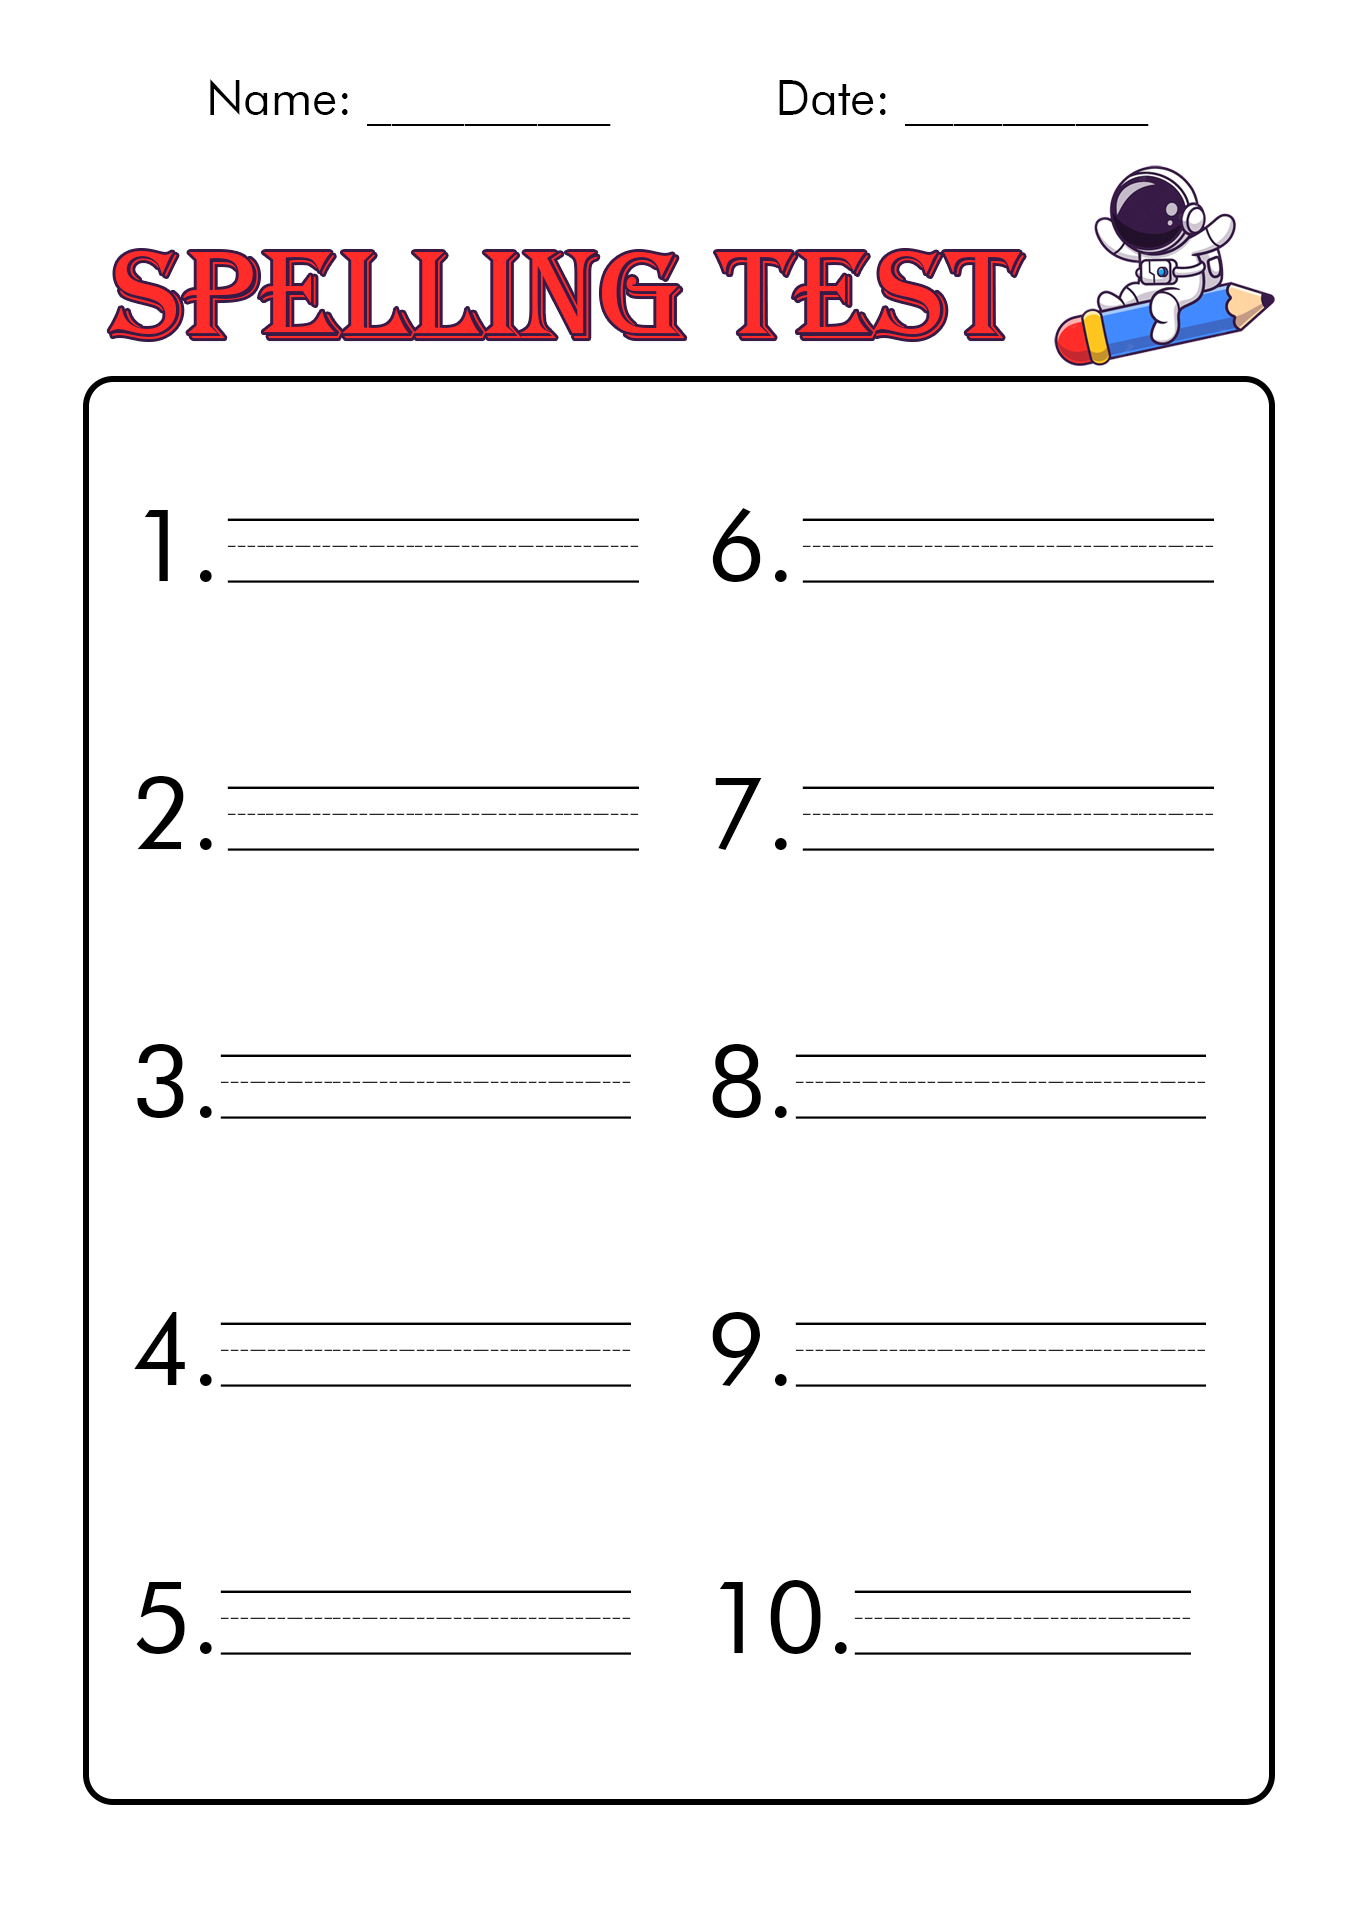 Spelling Test Paper Free Printable